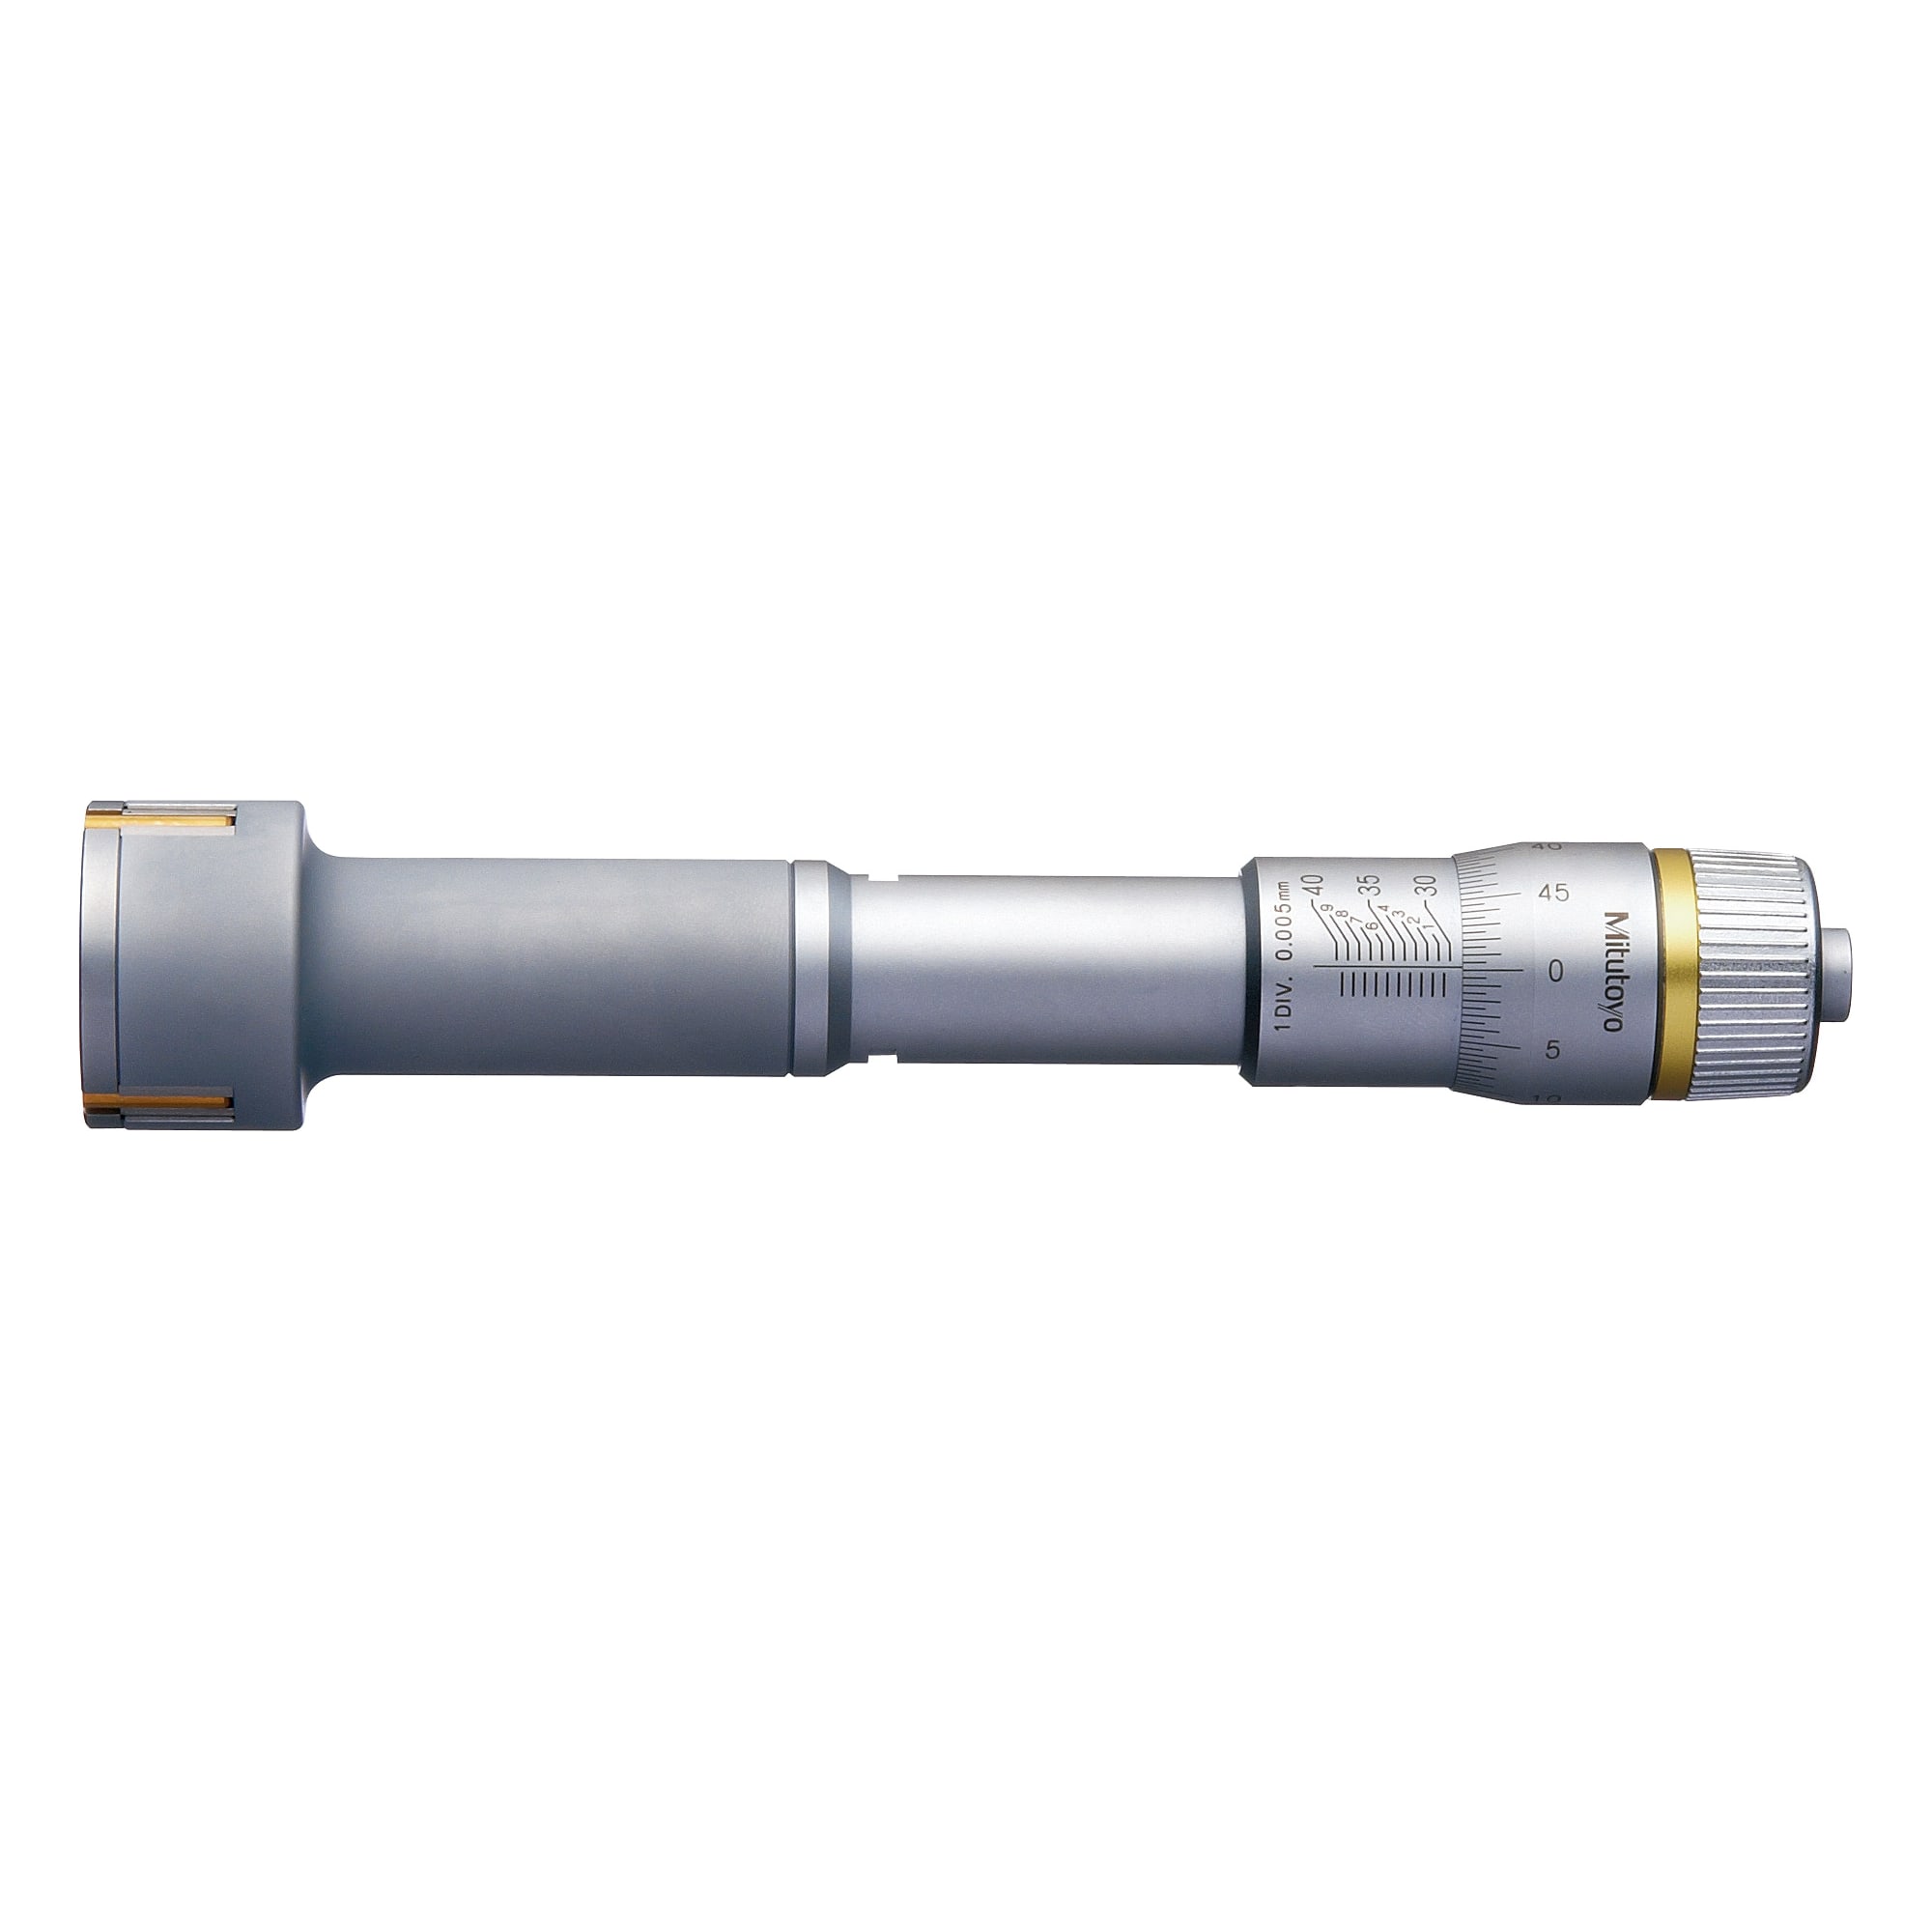 8mm 10mm Bore Gauge Internal Micrometer Digital Micrometers Ltd